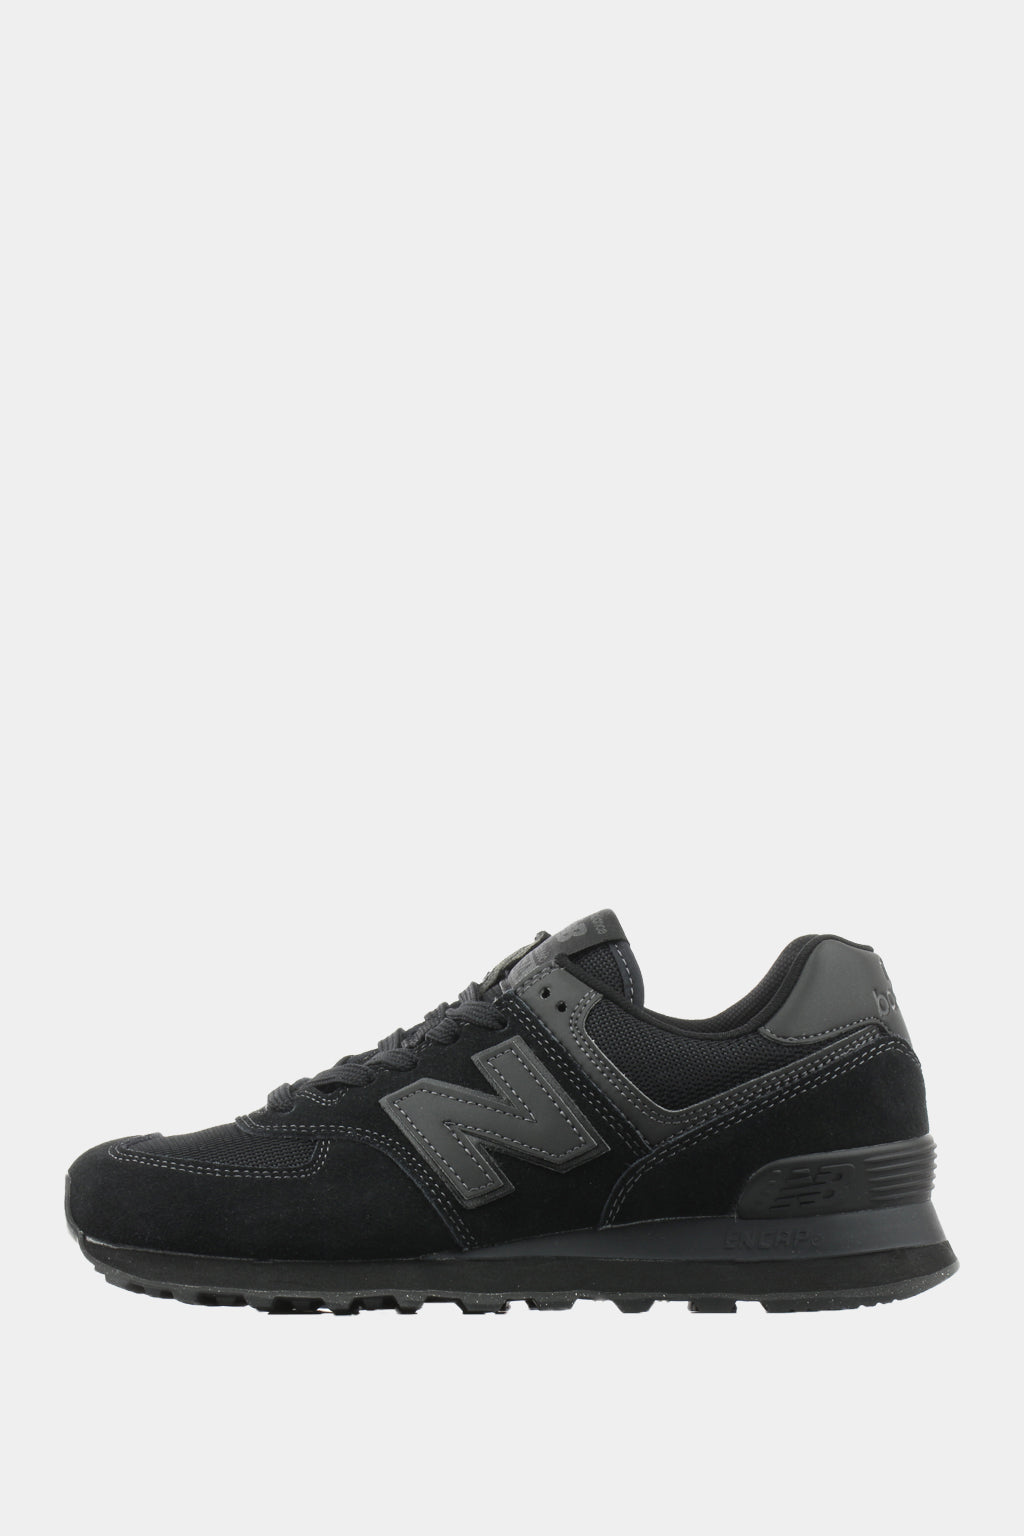 New Balance - 574 Shoes